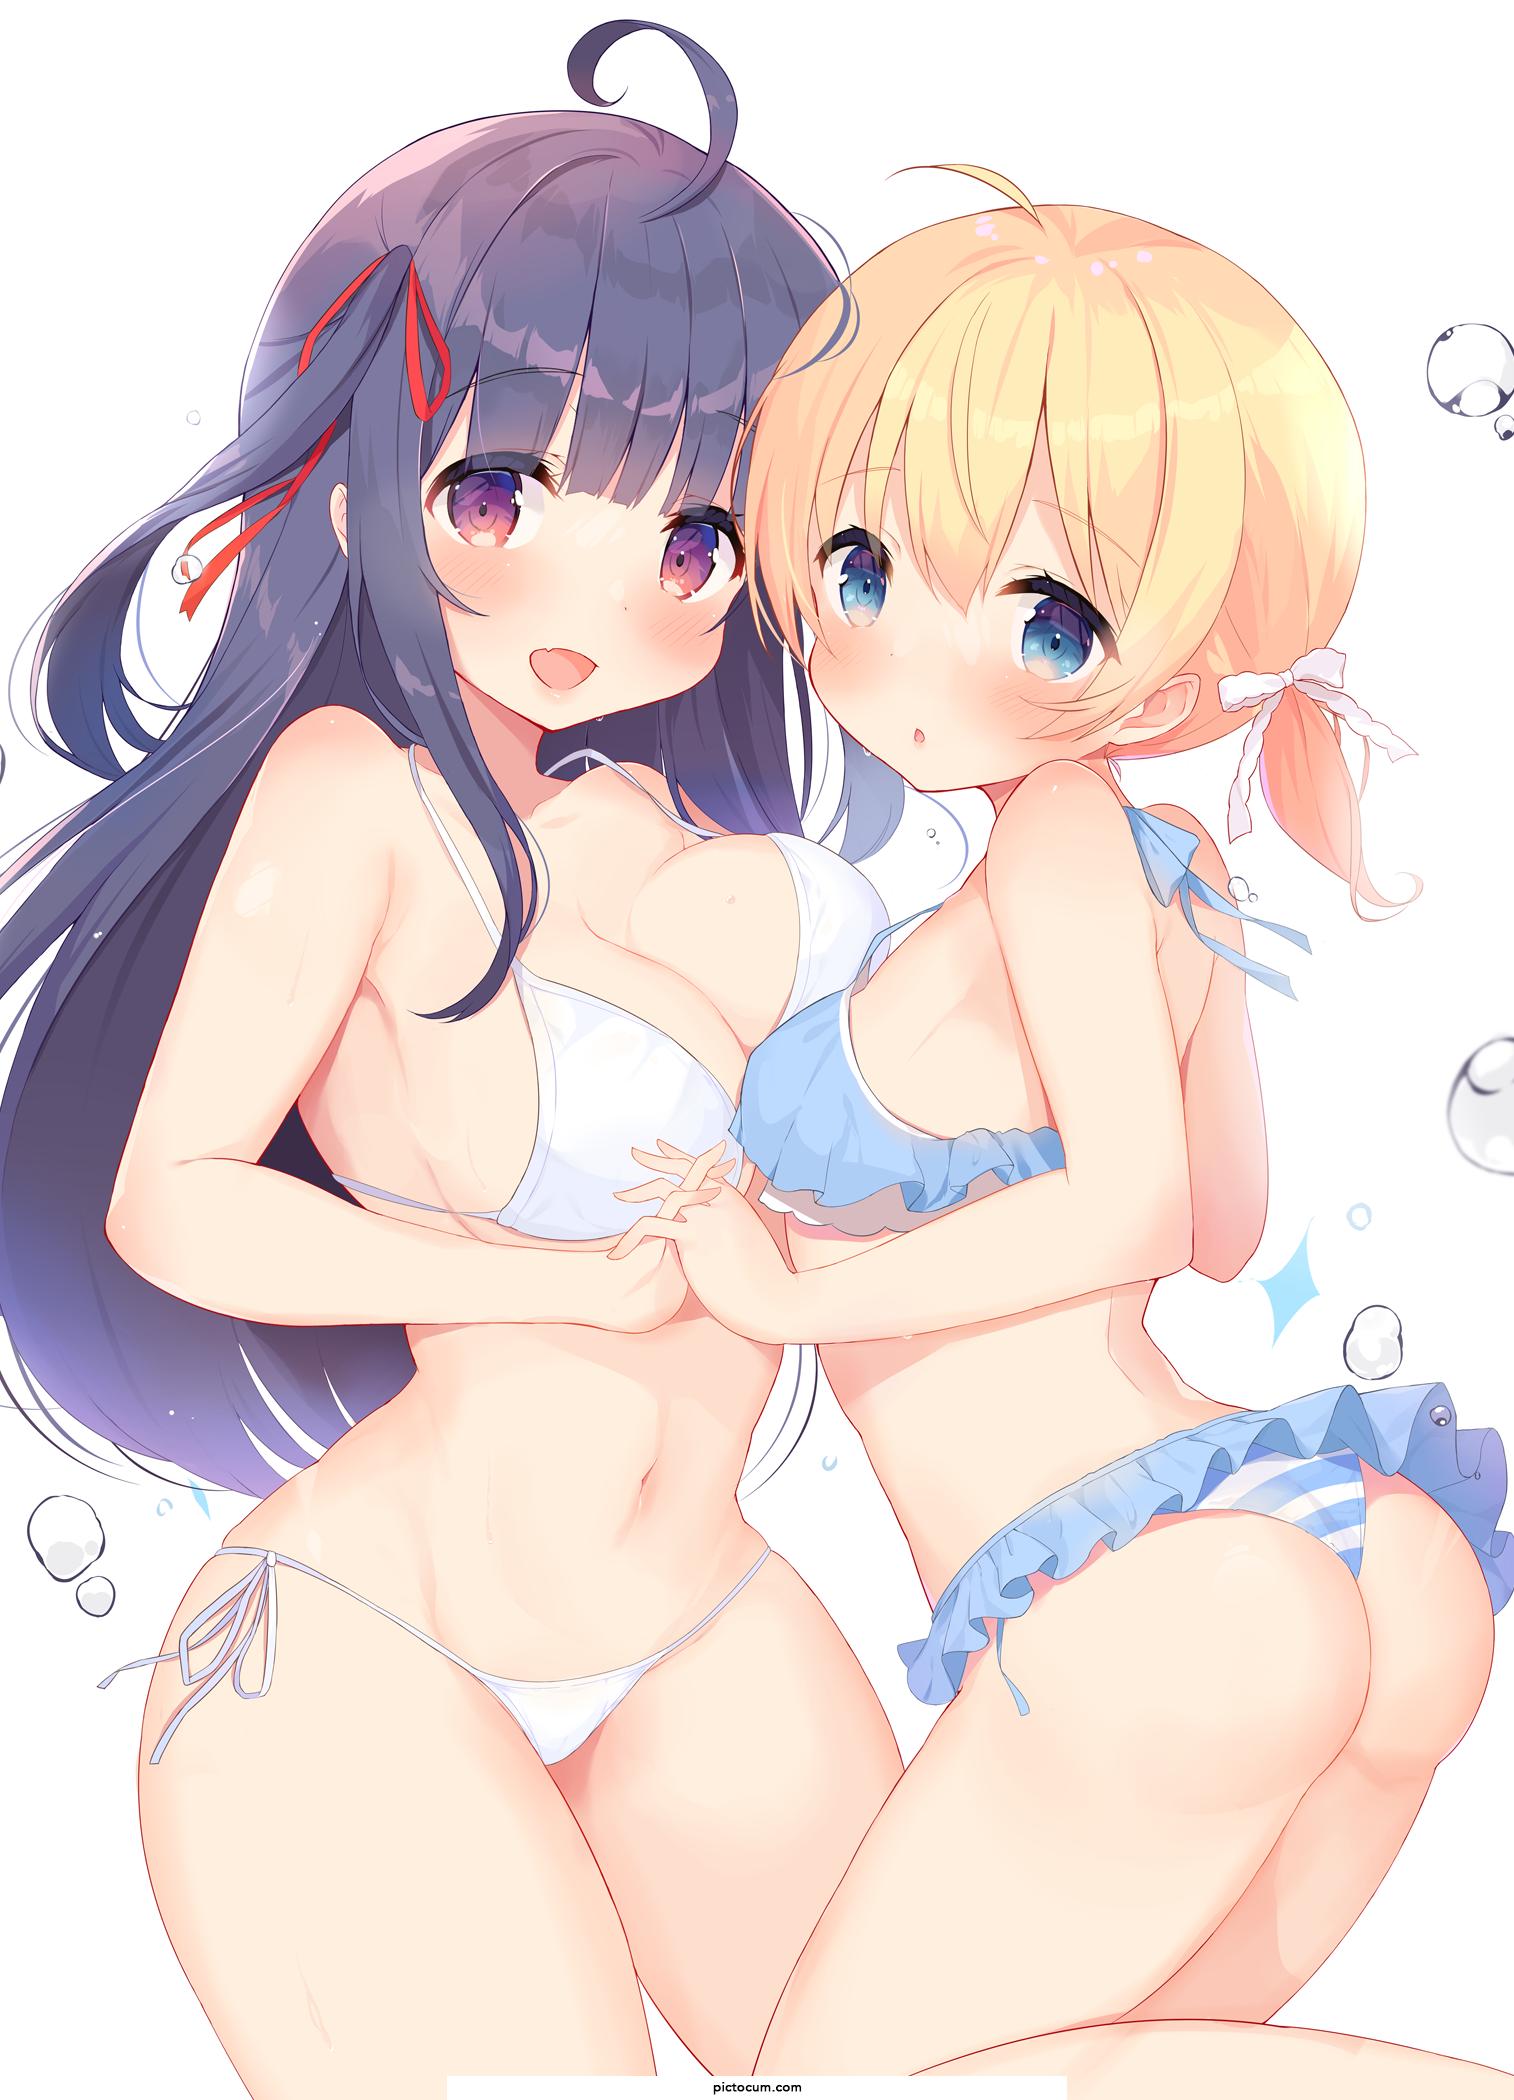 Bikini Girls Blushing